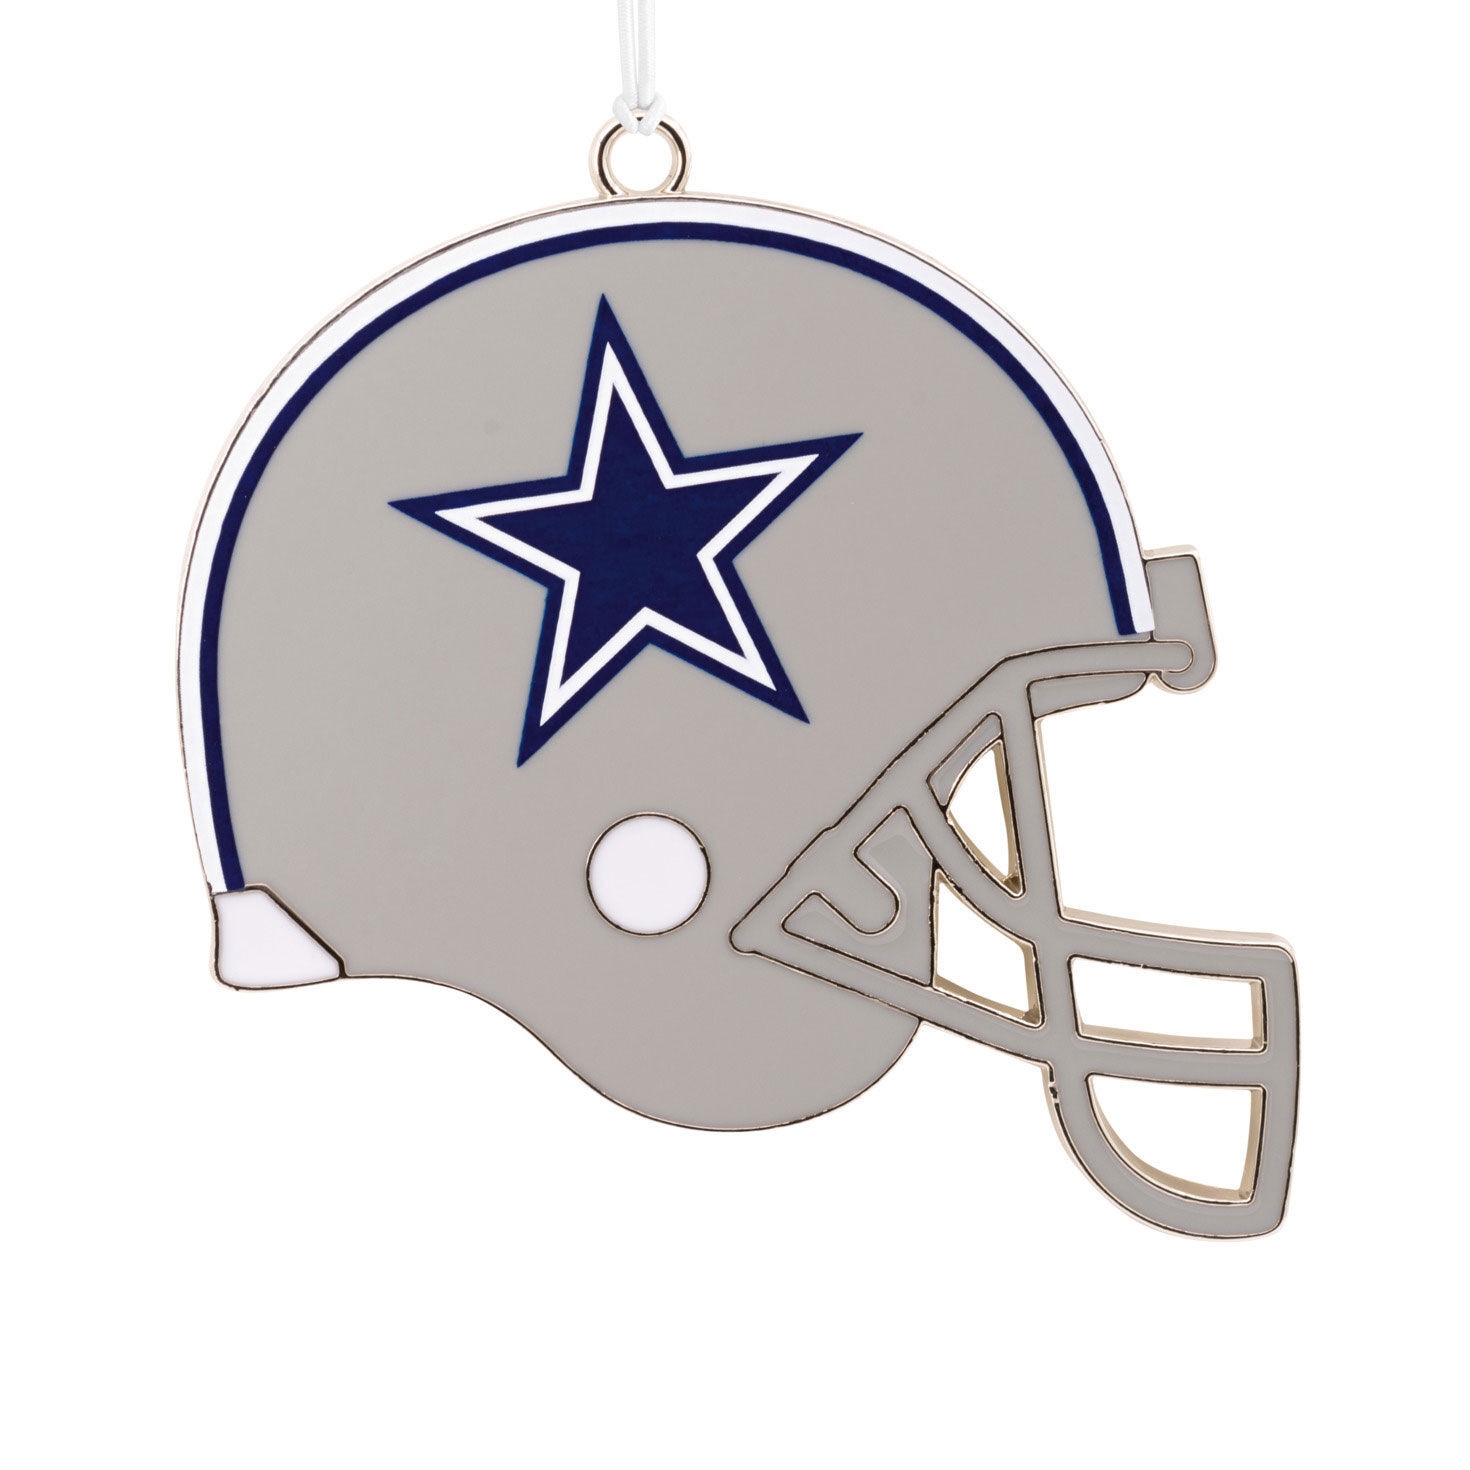 FANMATS NFL - Dallas Cowboys Helmet Rug - 5ft. x 6ft. 5728 - The Home Depot